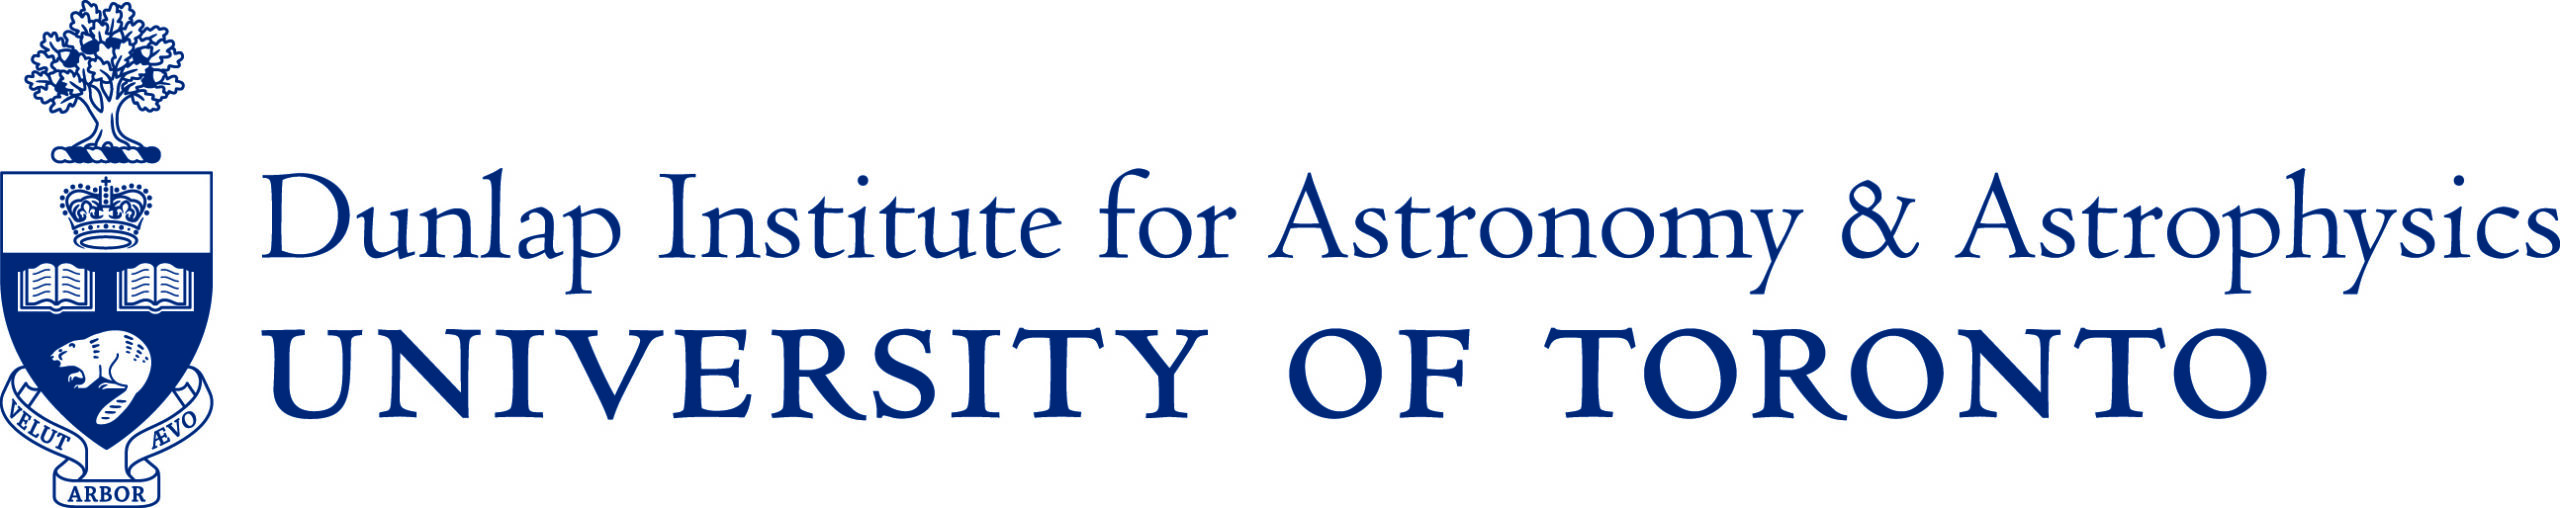 Logo for Dunlap Institute for Astronomy & Astrophysics at the University of Toronto